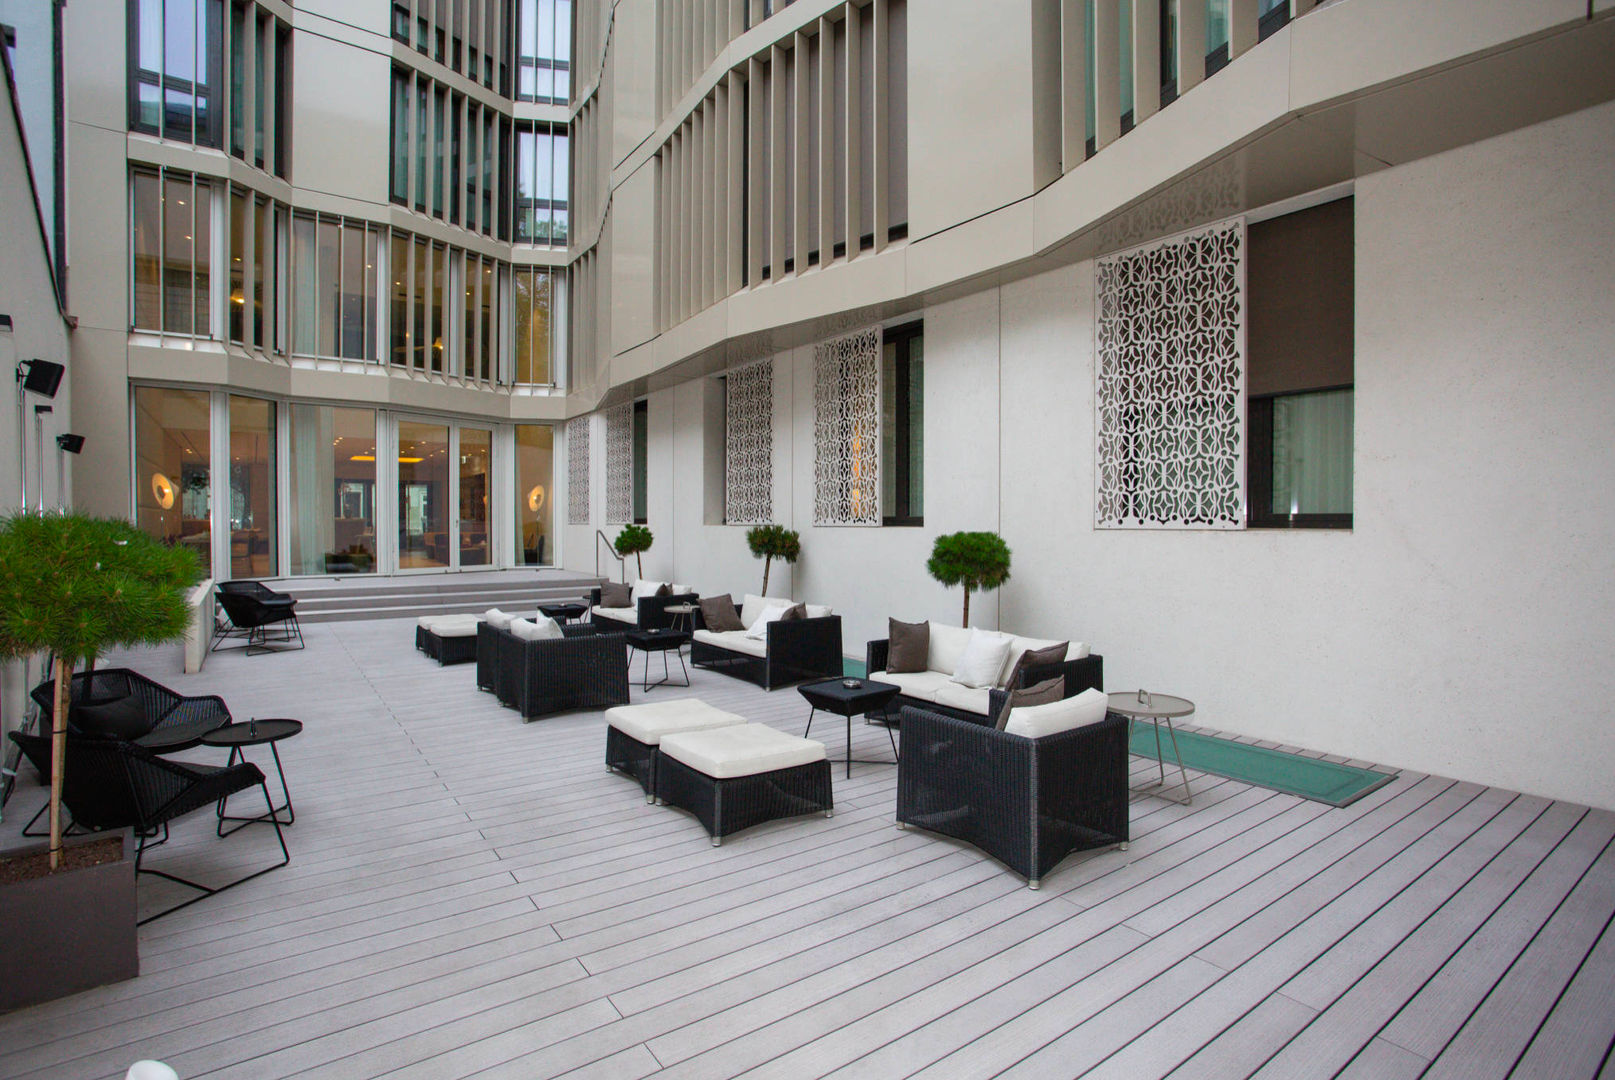 Hotel "The Passage", Bâle (Suisse), TimberTech TimberTech Terrace Wood-Plastic Composite